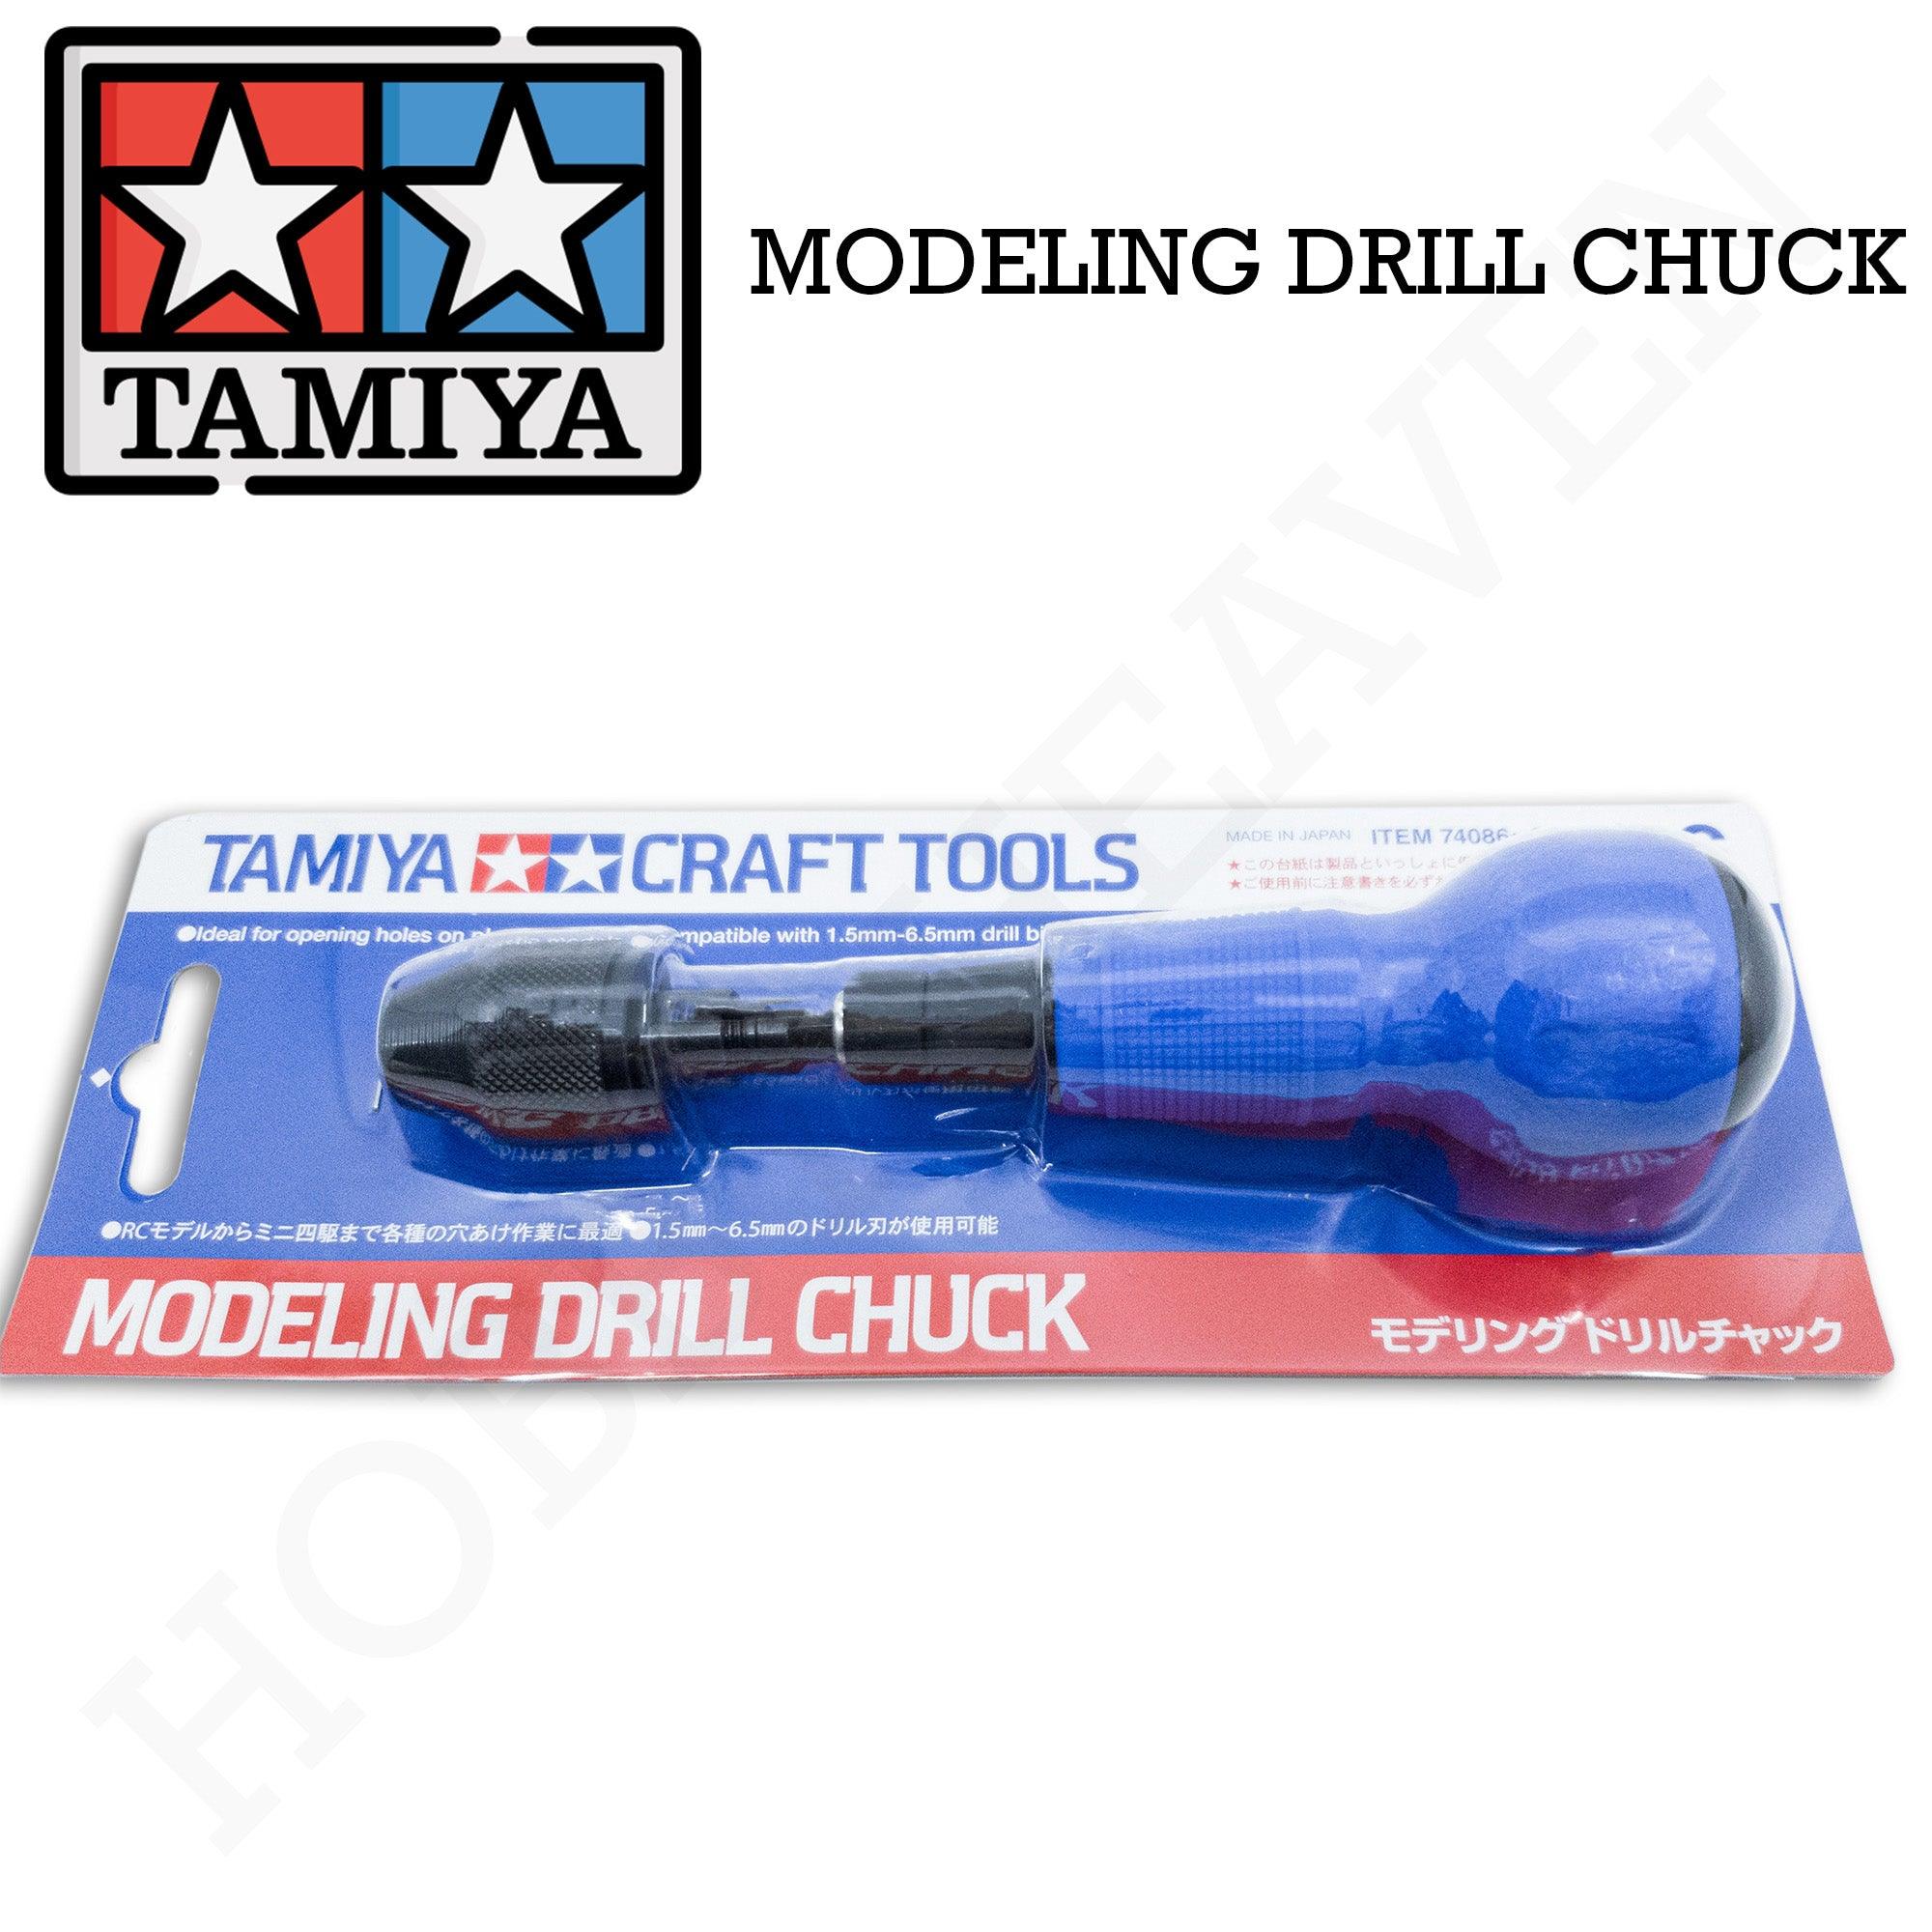 Tamiya Modeling Drill Chuck